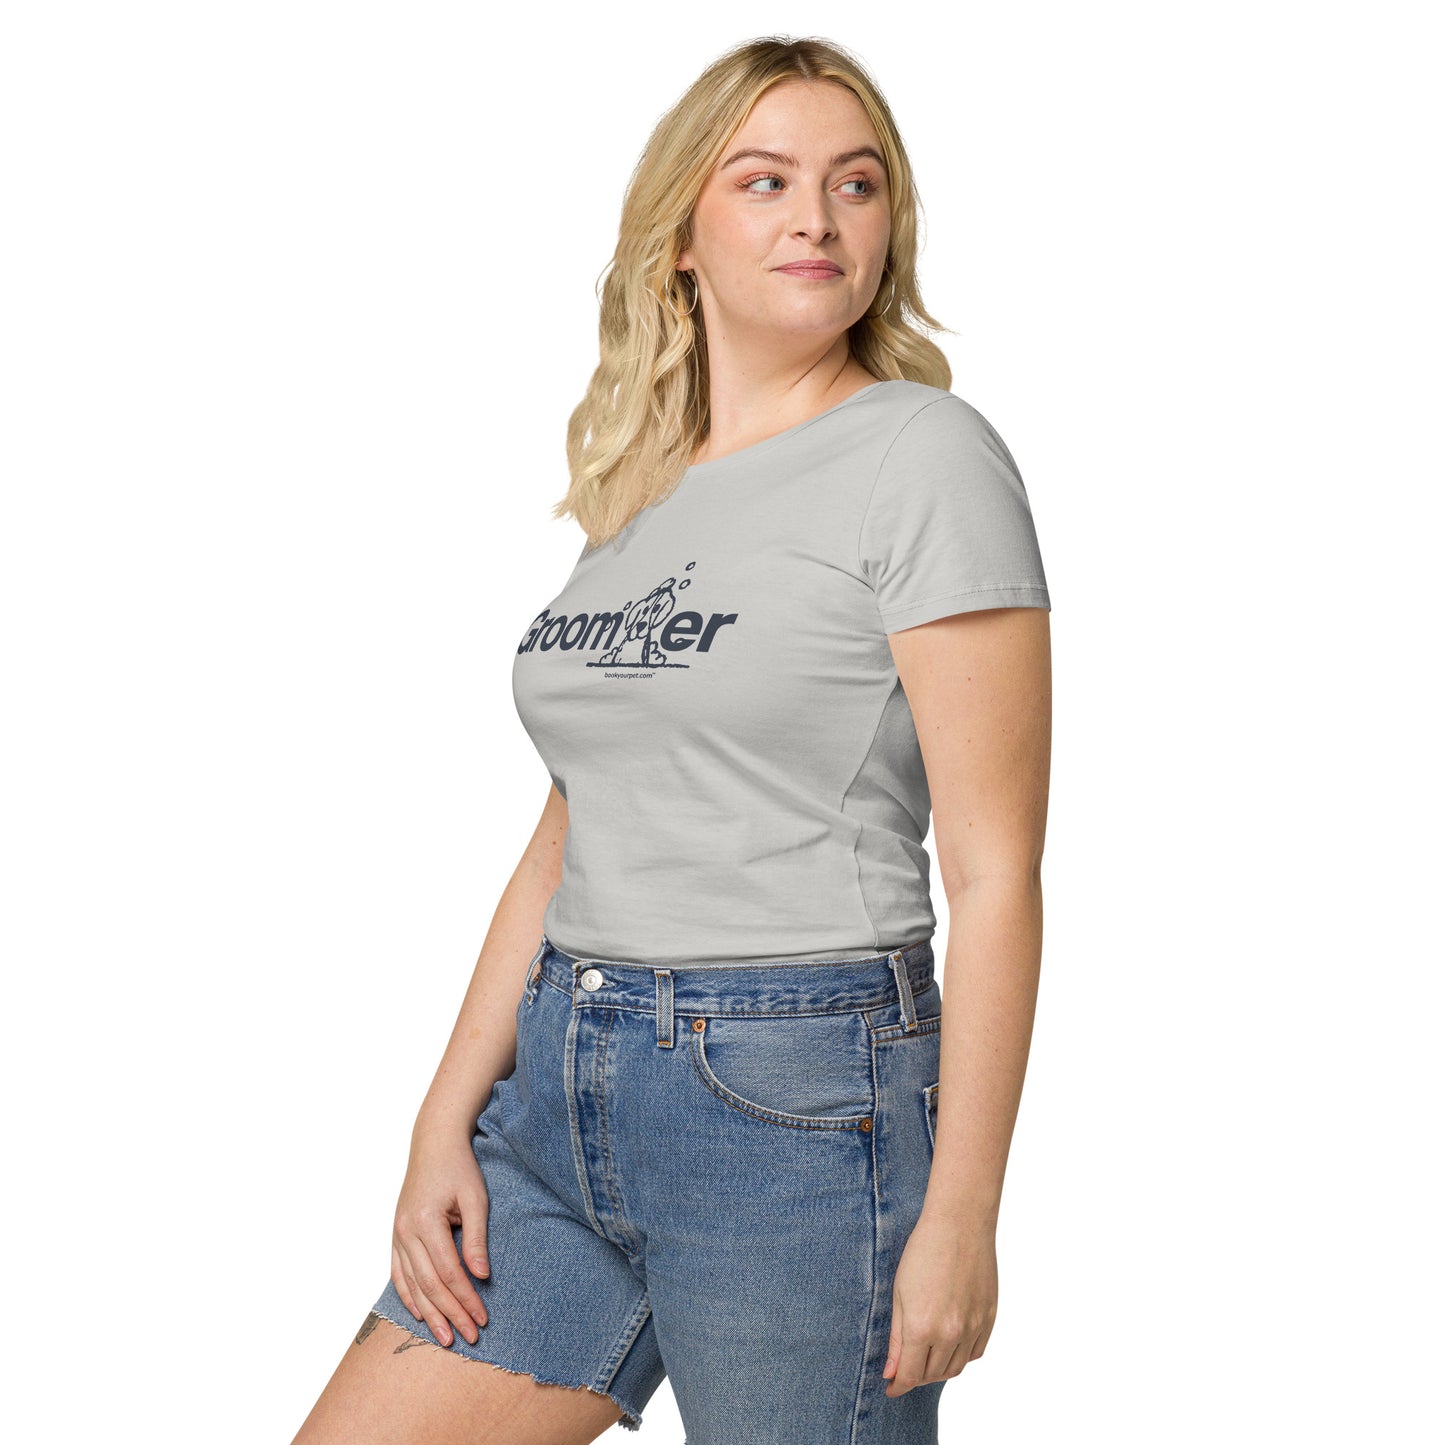 Women’s basic Groomer organic t-shirt